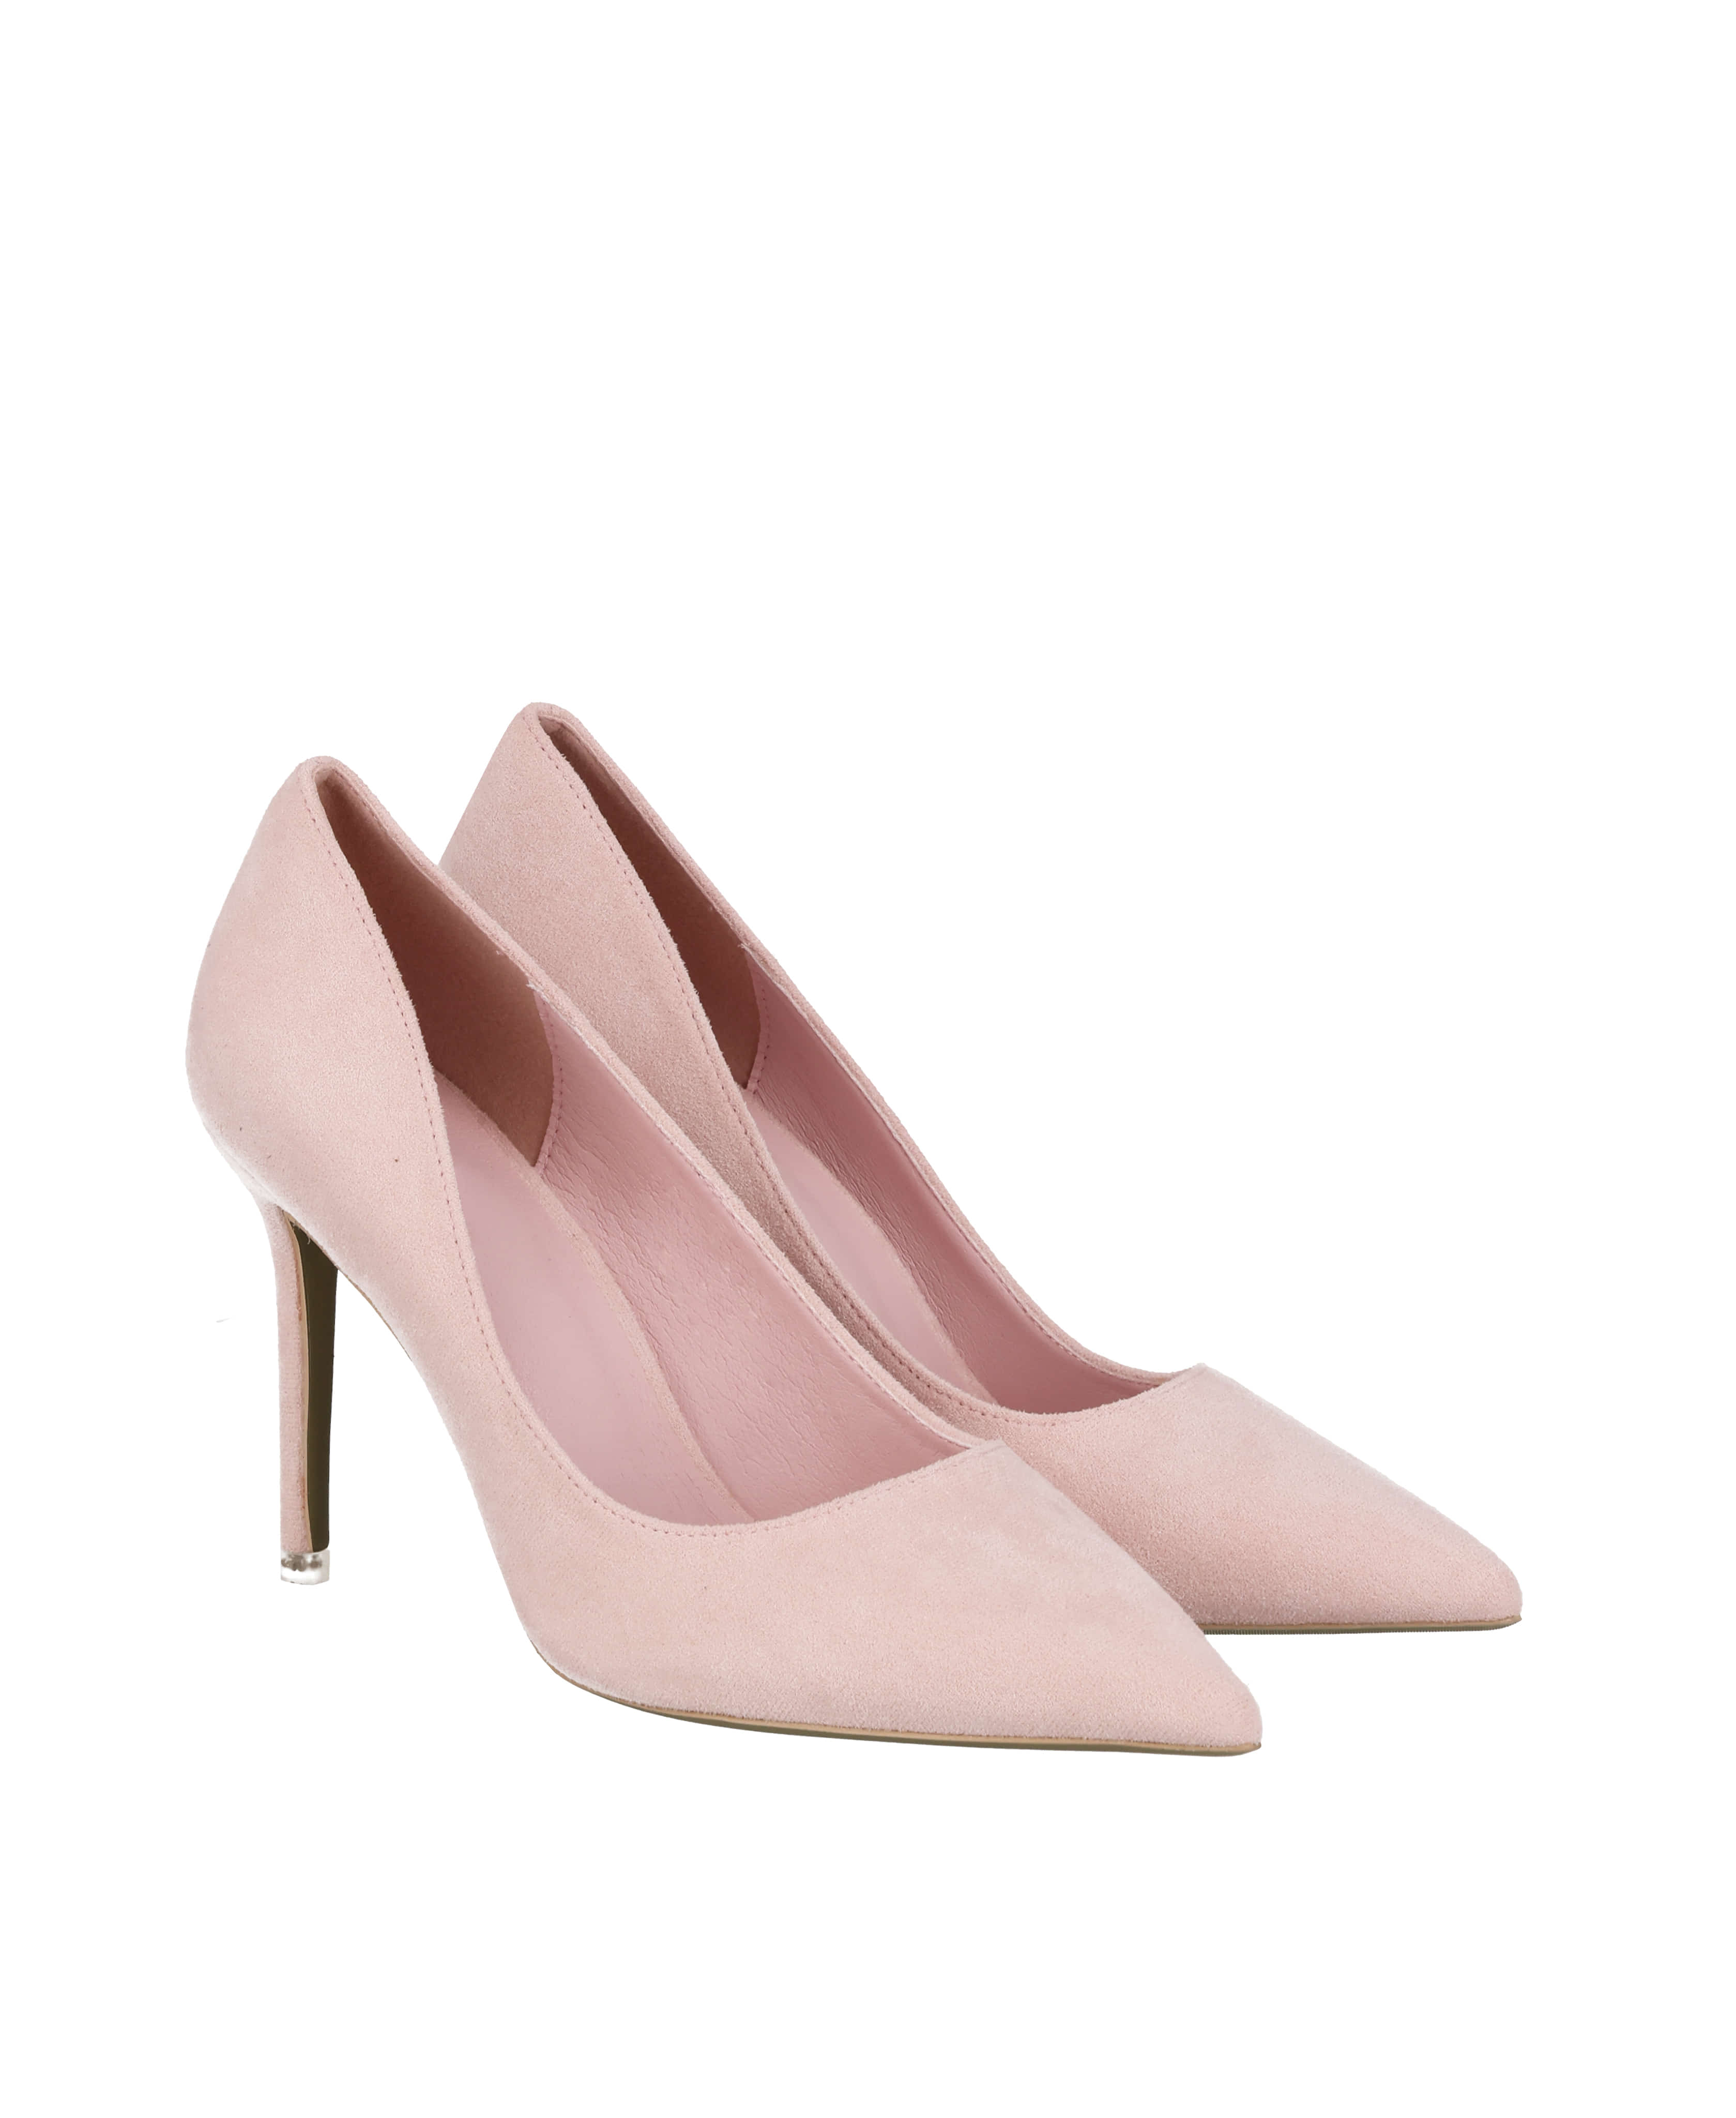 Ice cream pink heels